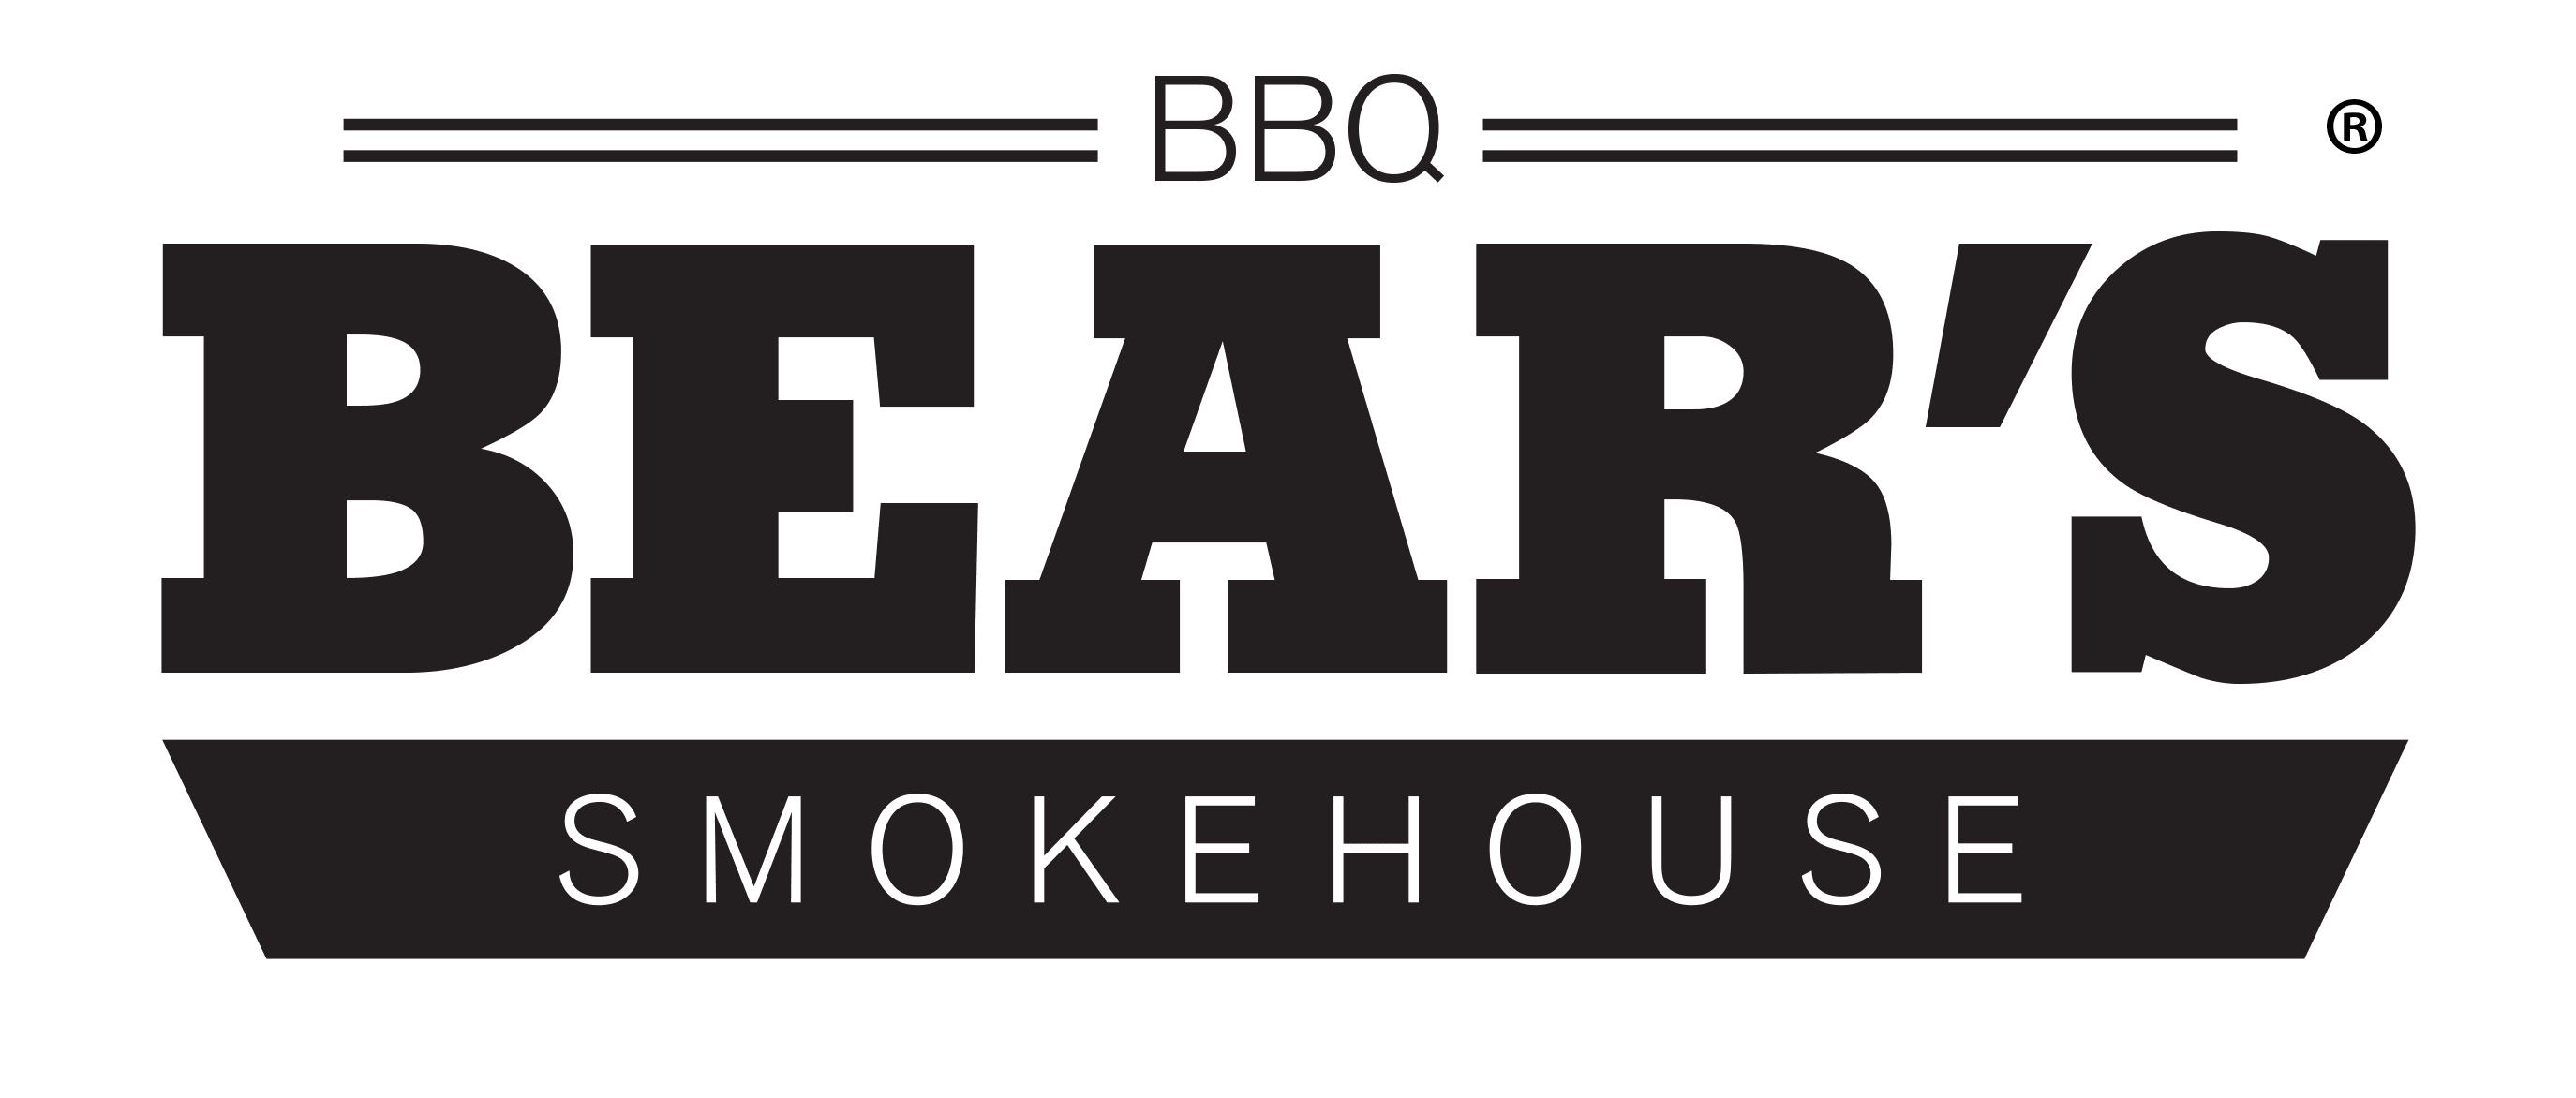 Bear's Smokehouse logo